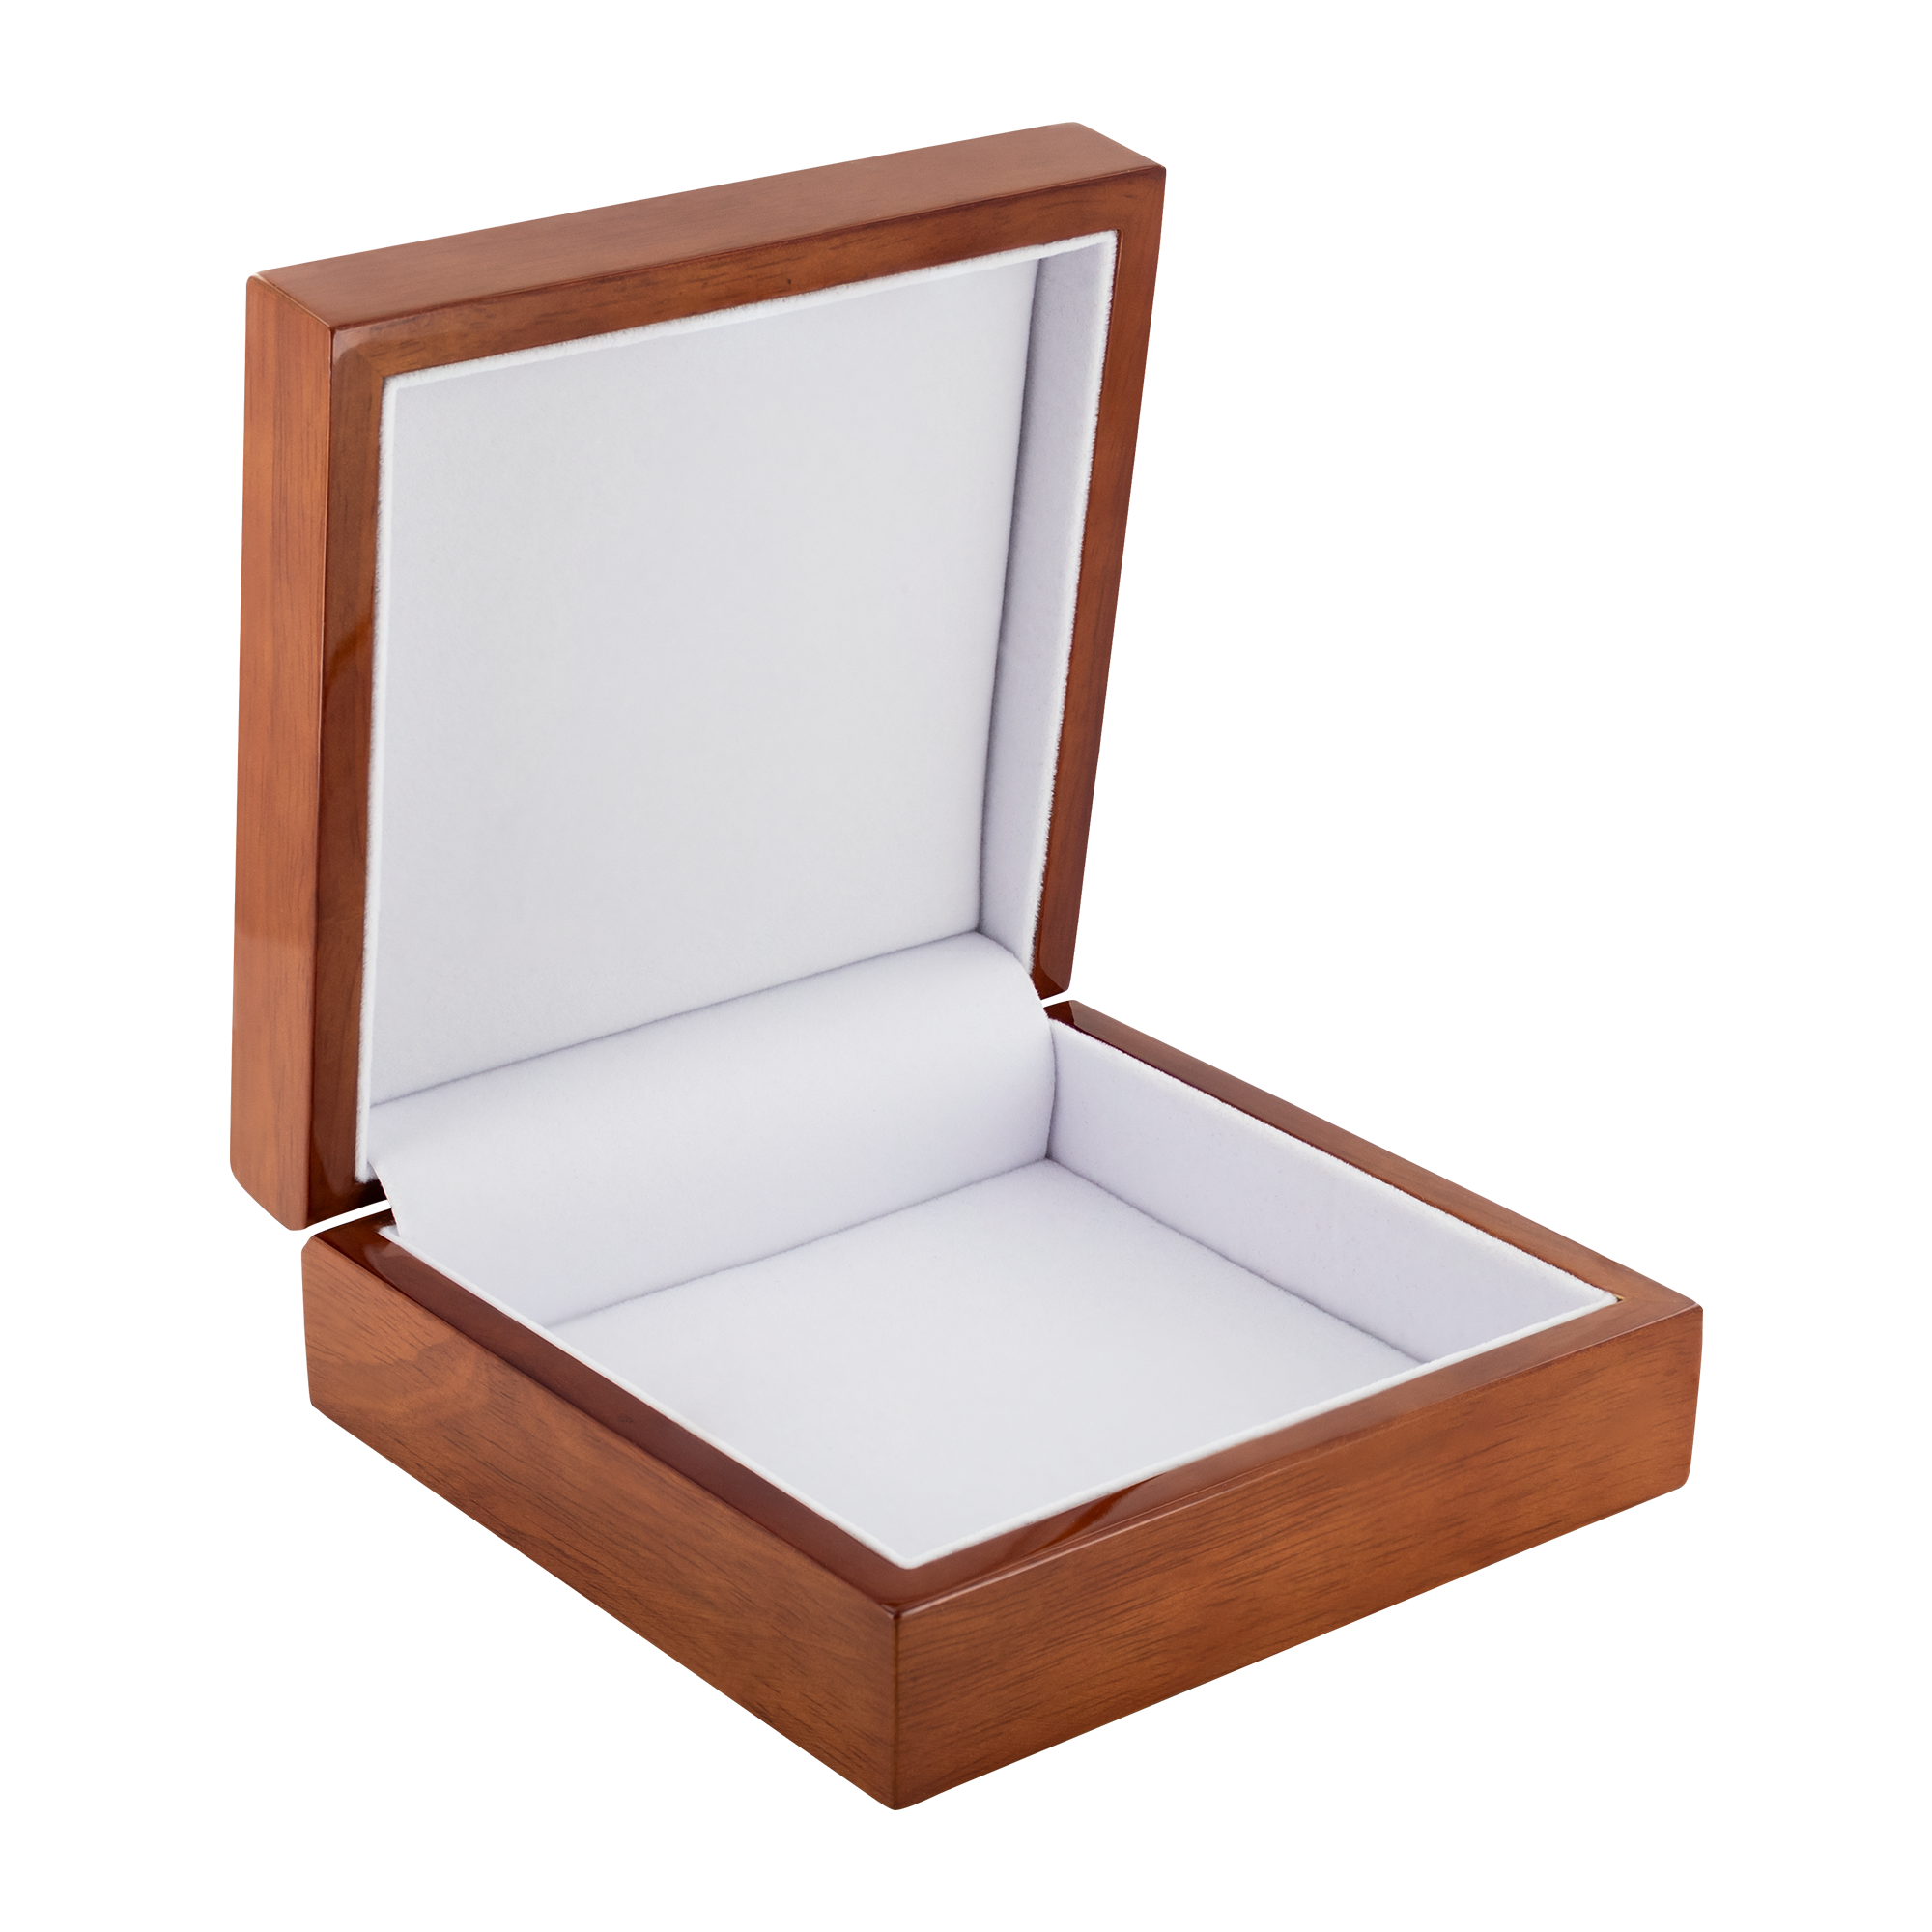 fv Genuine Wood Jewelry Box